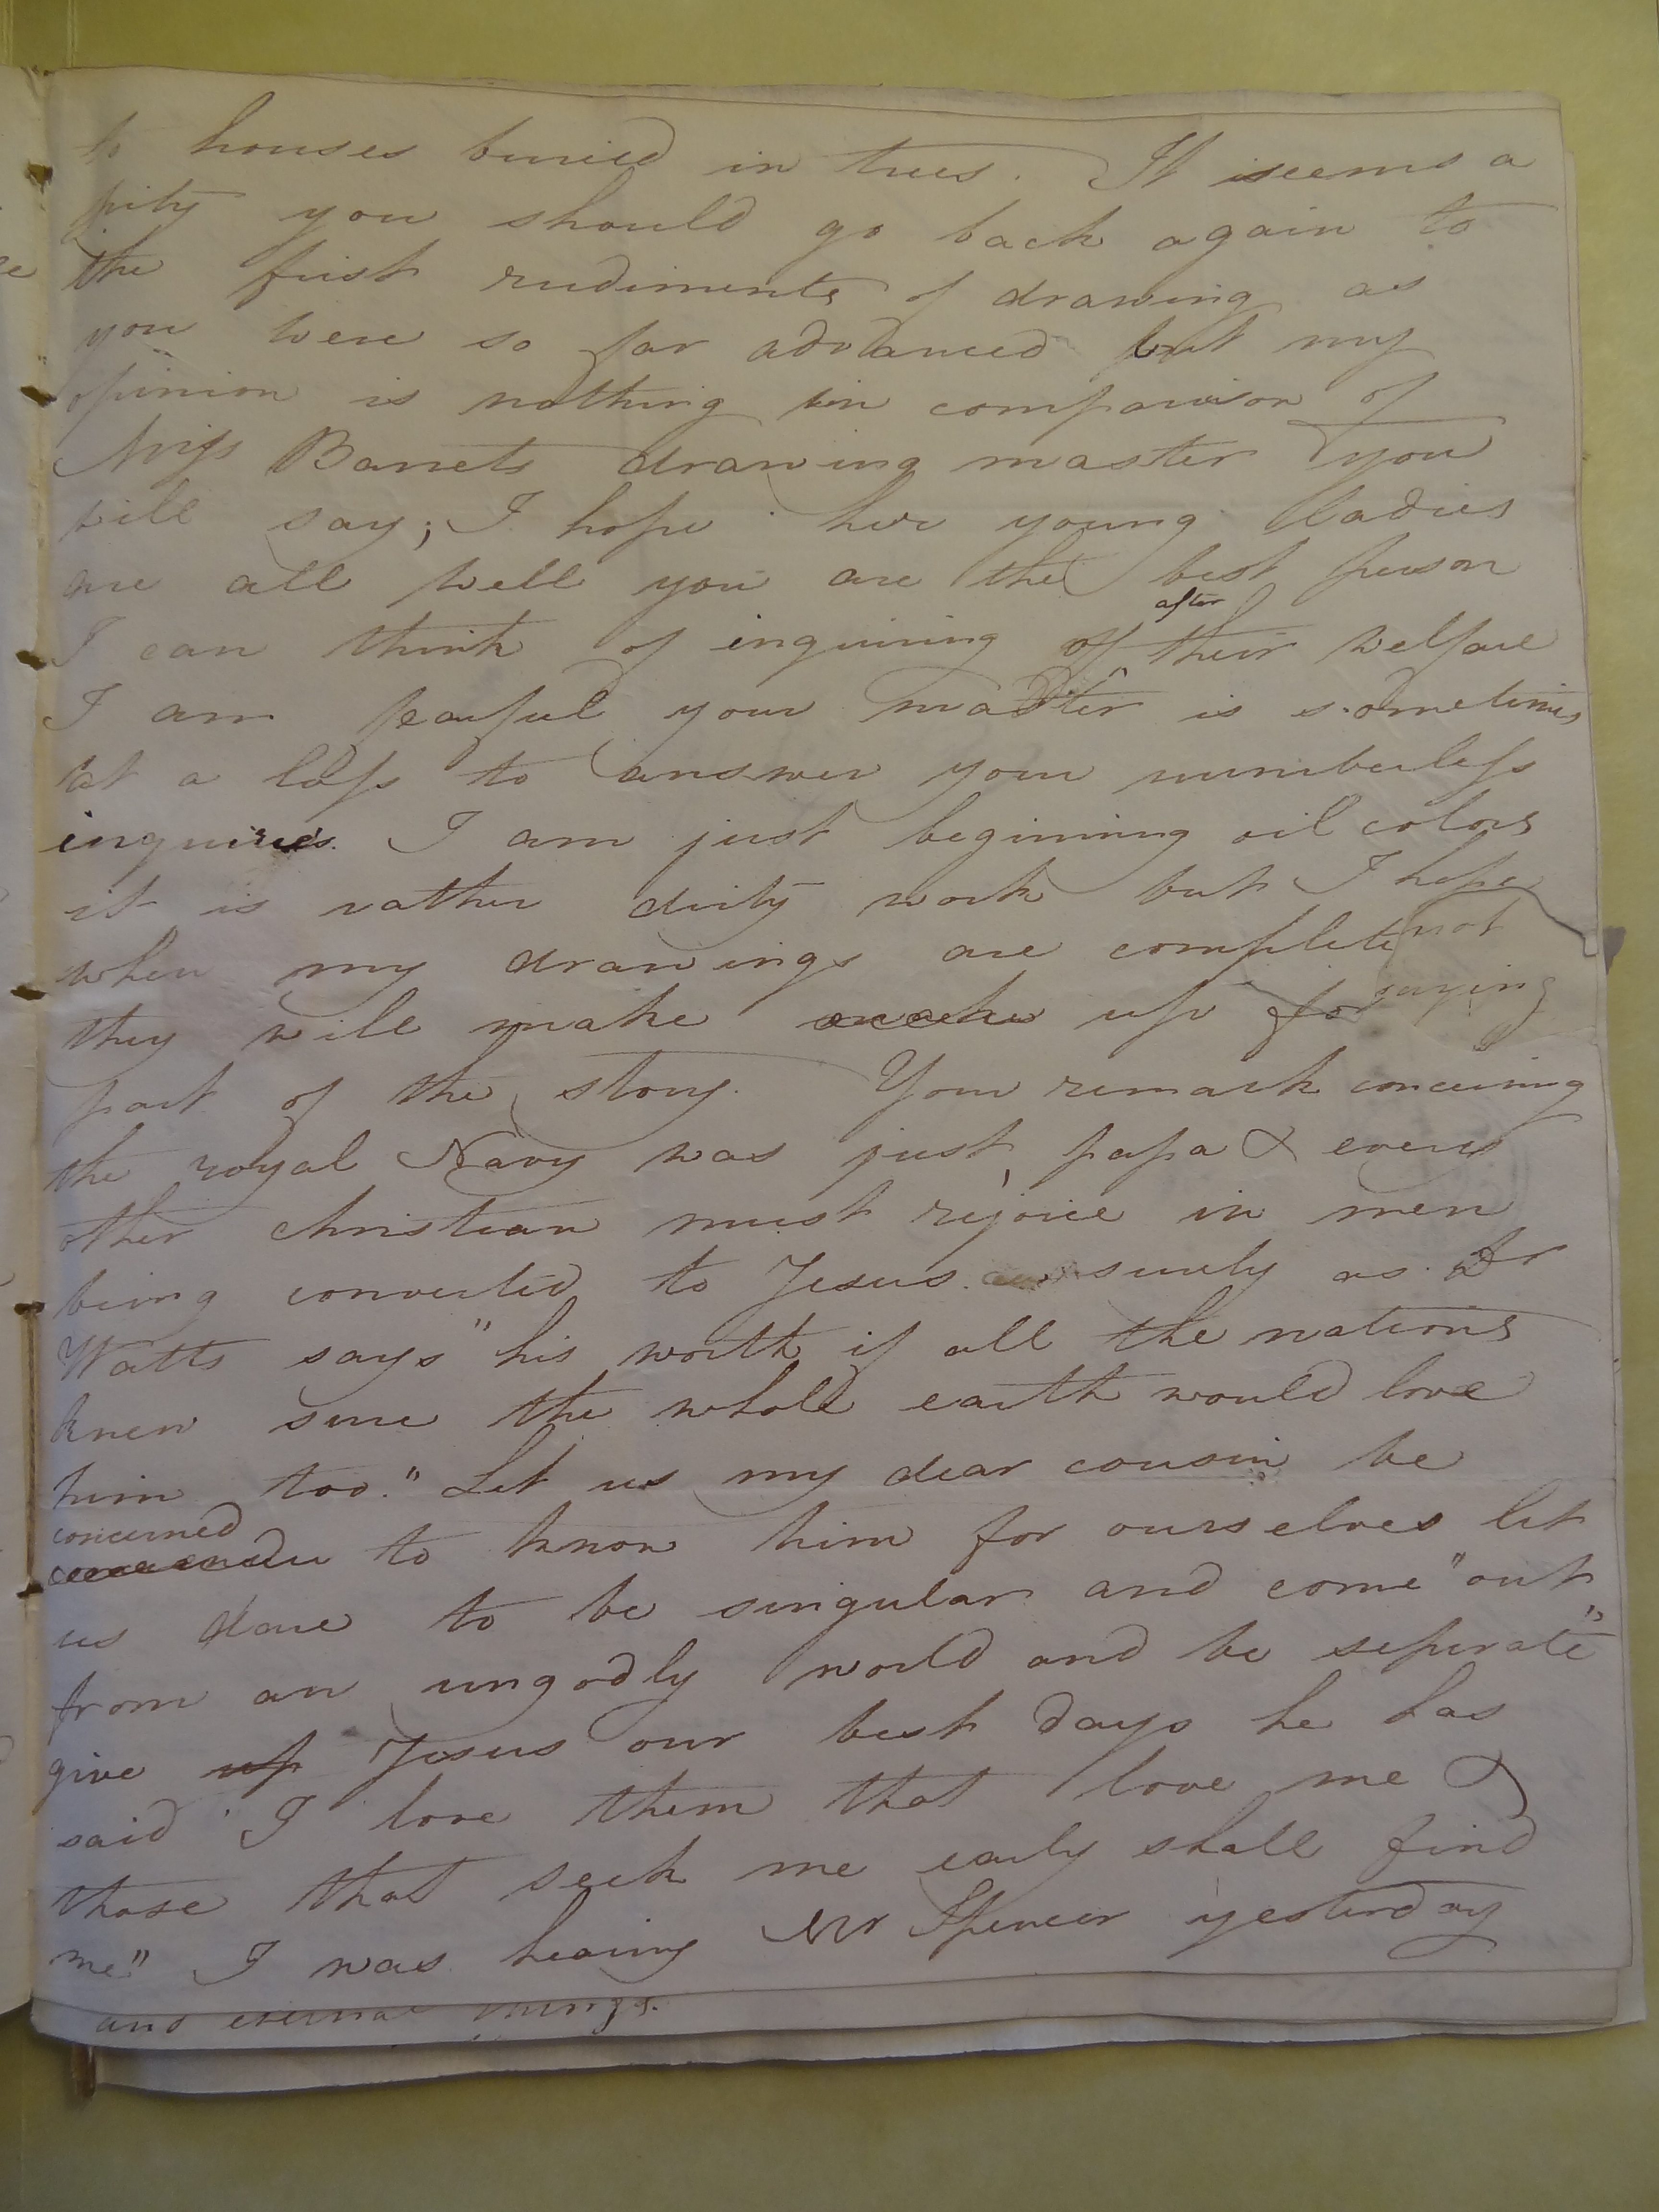 Image #3 of letter: Rebekah Hope and Rebekah Stratten to Thomas Bateman Junior, 25 September 1809